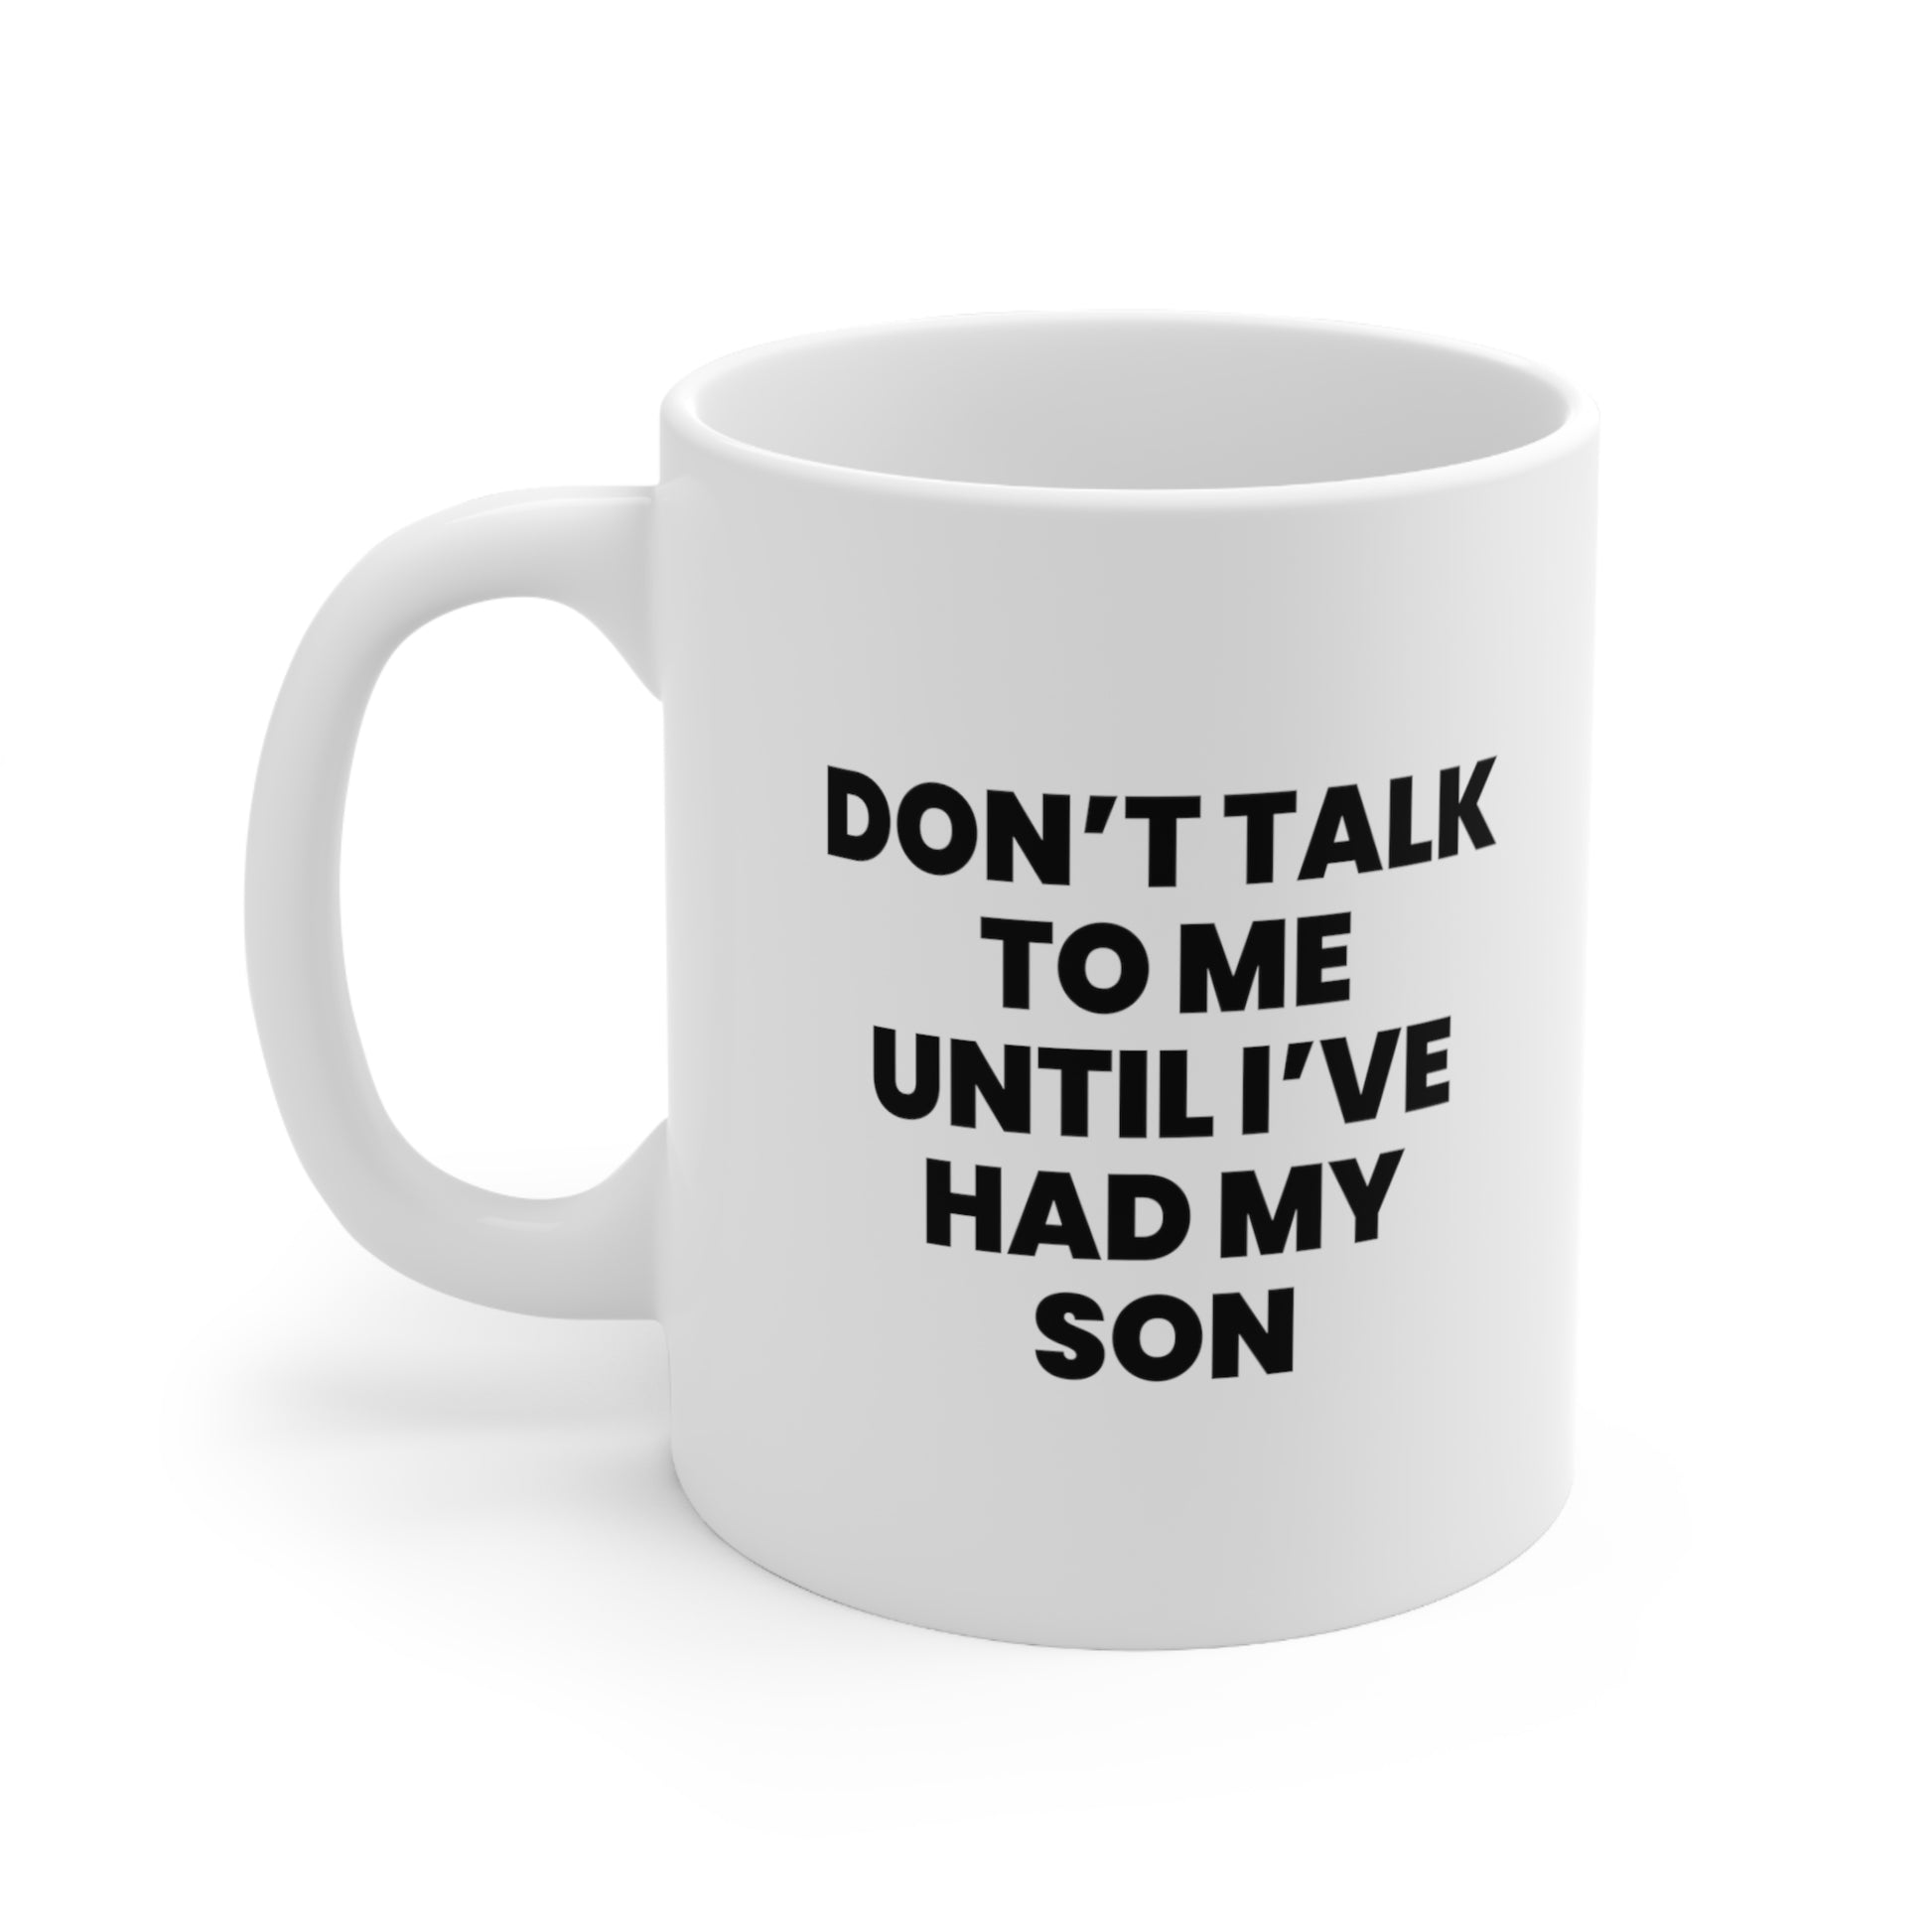 Don't talk to me until i've had my son Coffee Mug